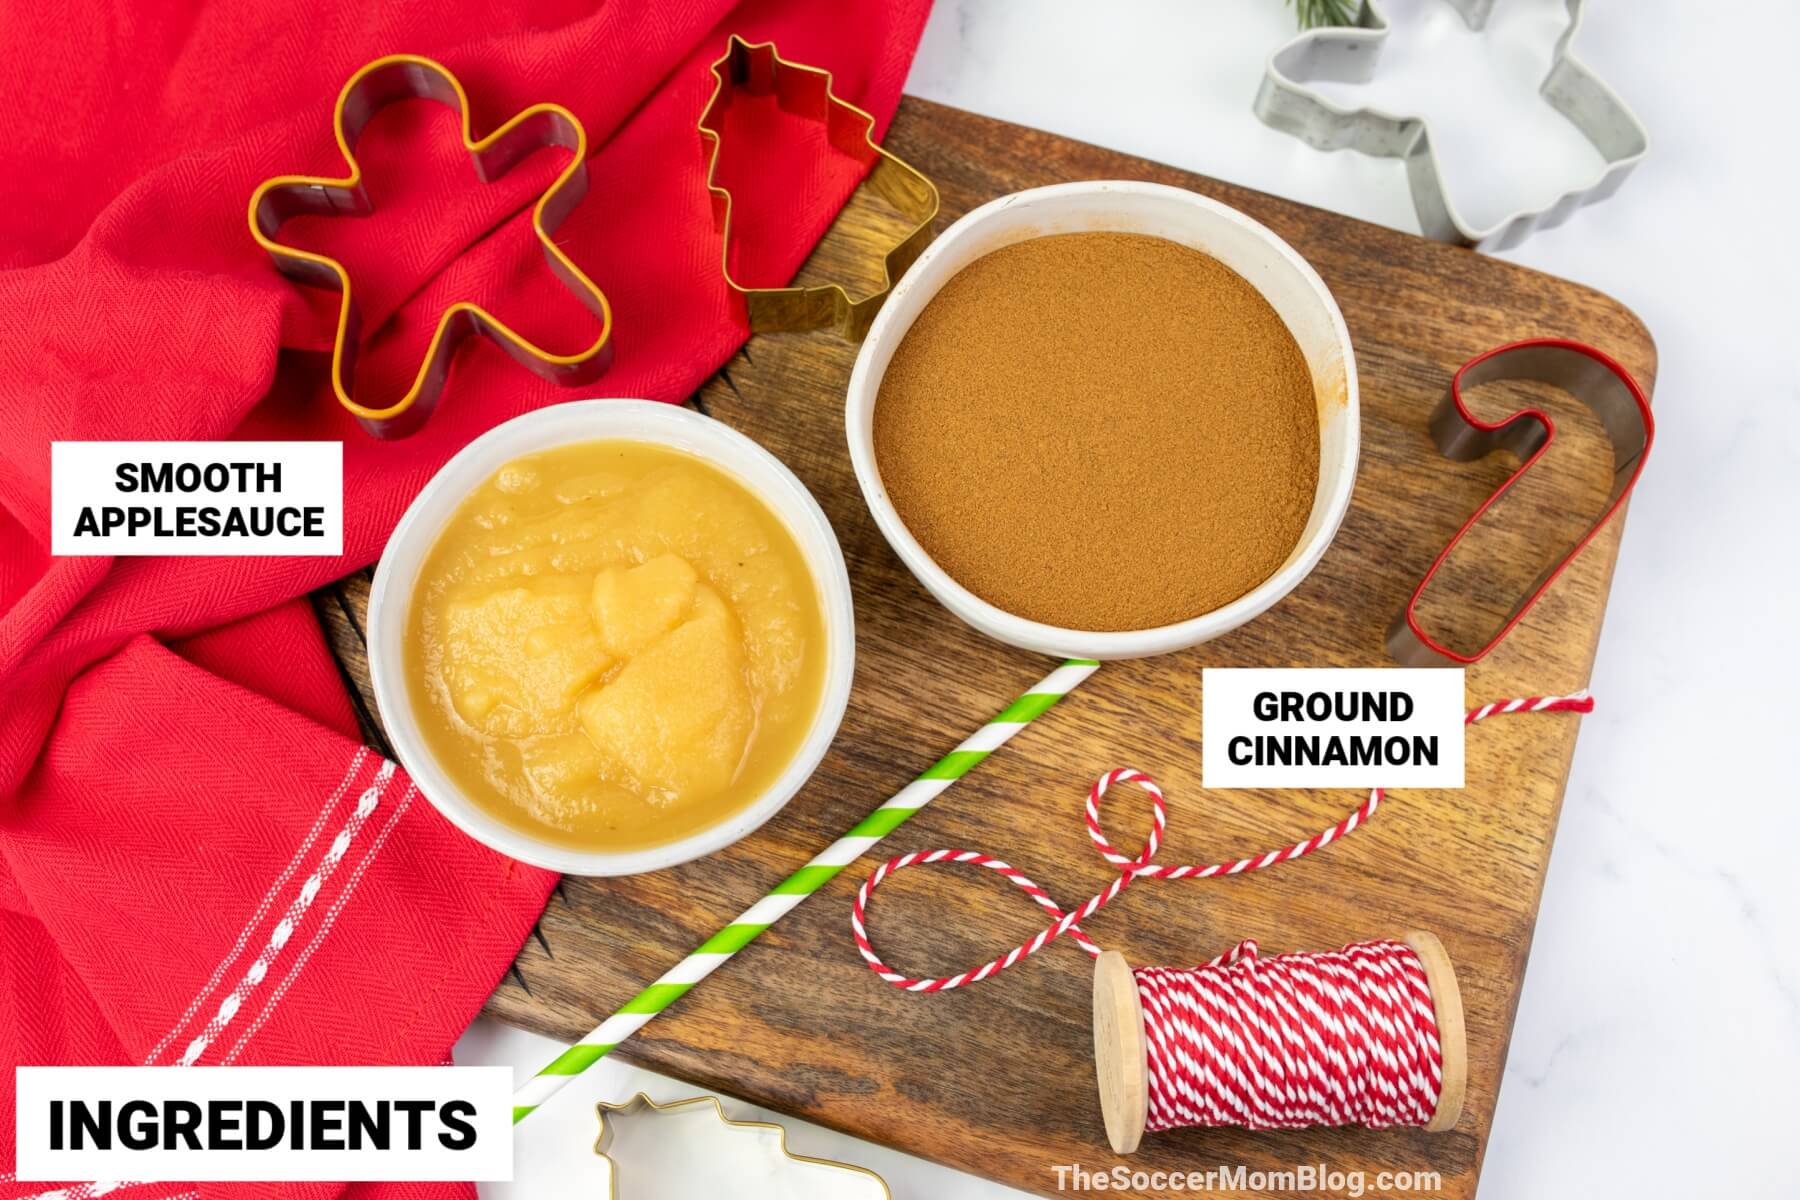 ingredients to make cinnamon ornaments: applesauce and ground cinnamon.